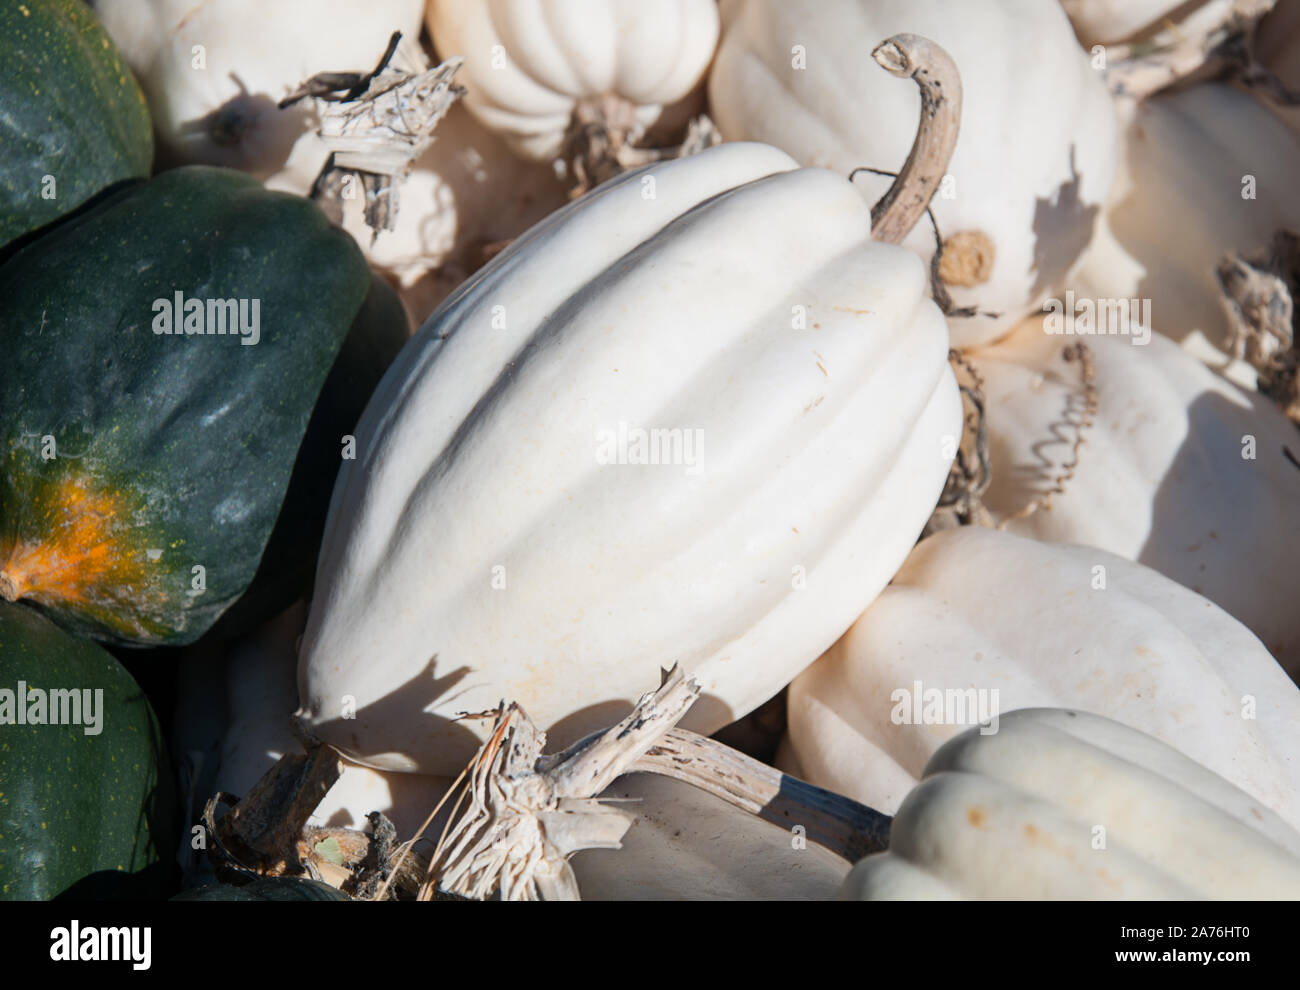 White acorn squash harvest vegetable lying next to a dark green classic acorn squash. Stock Photo